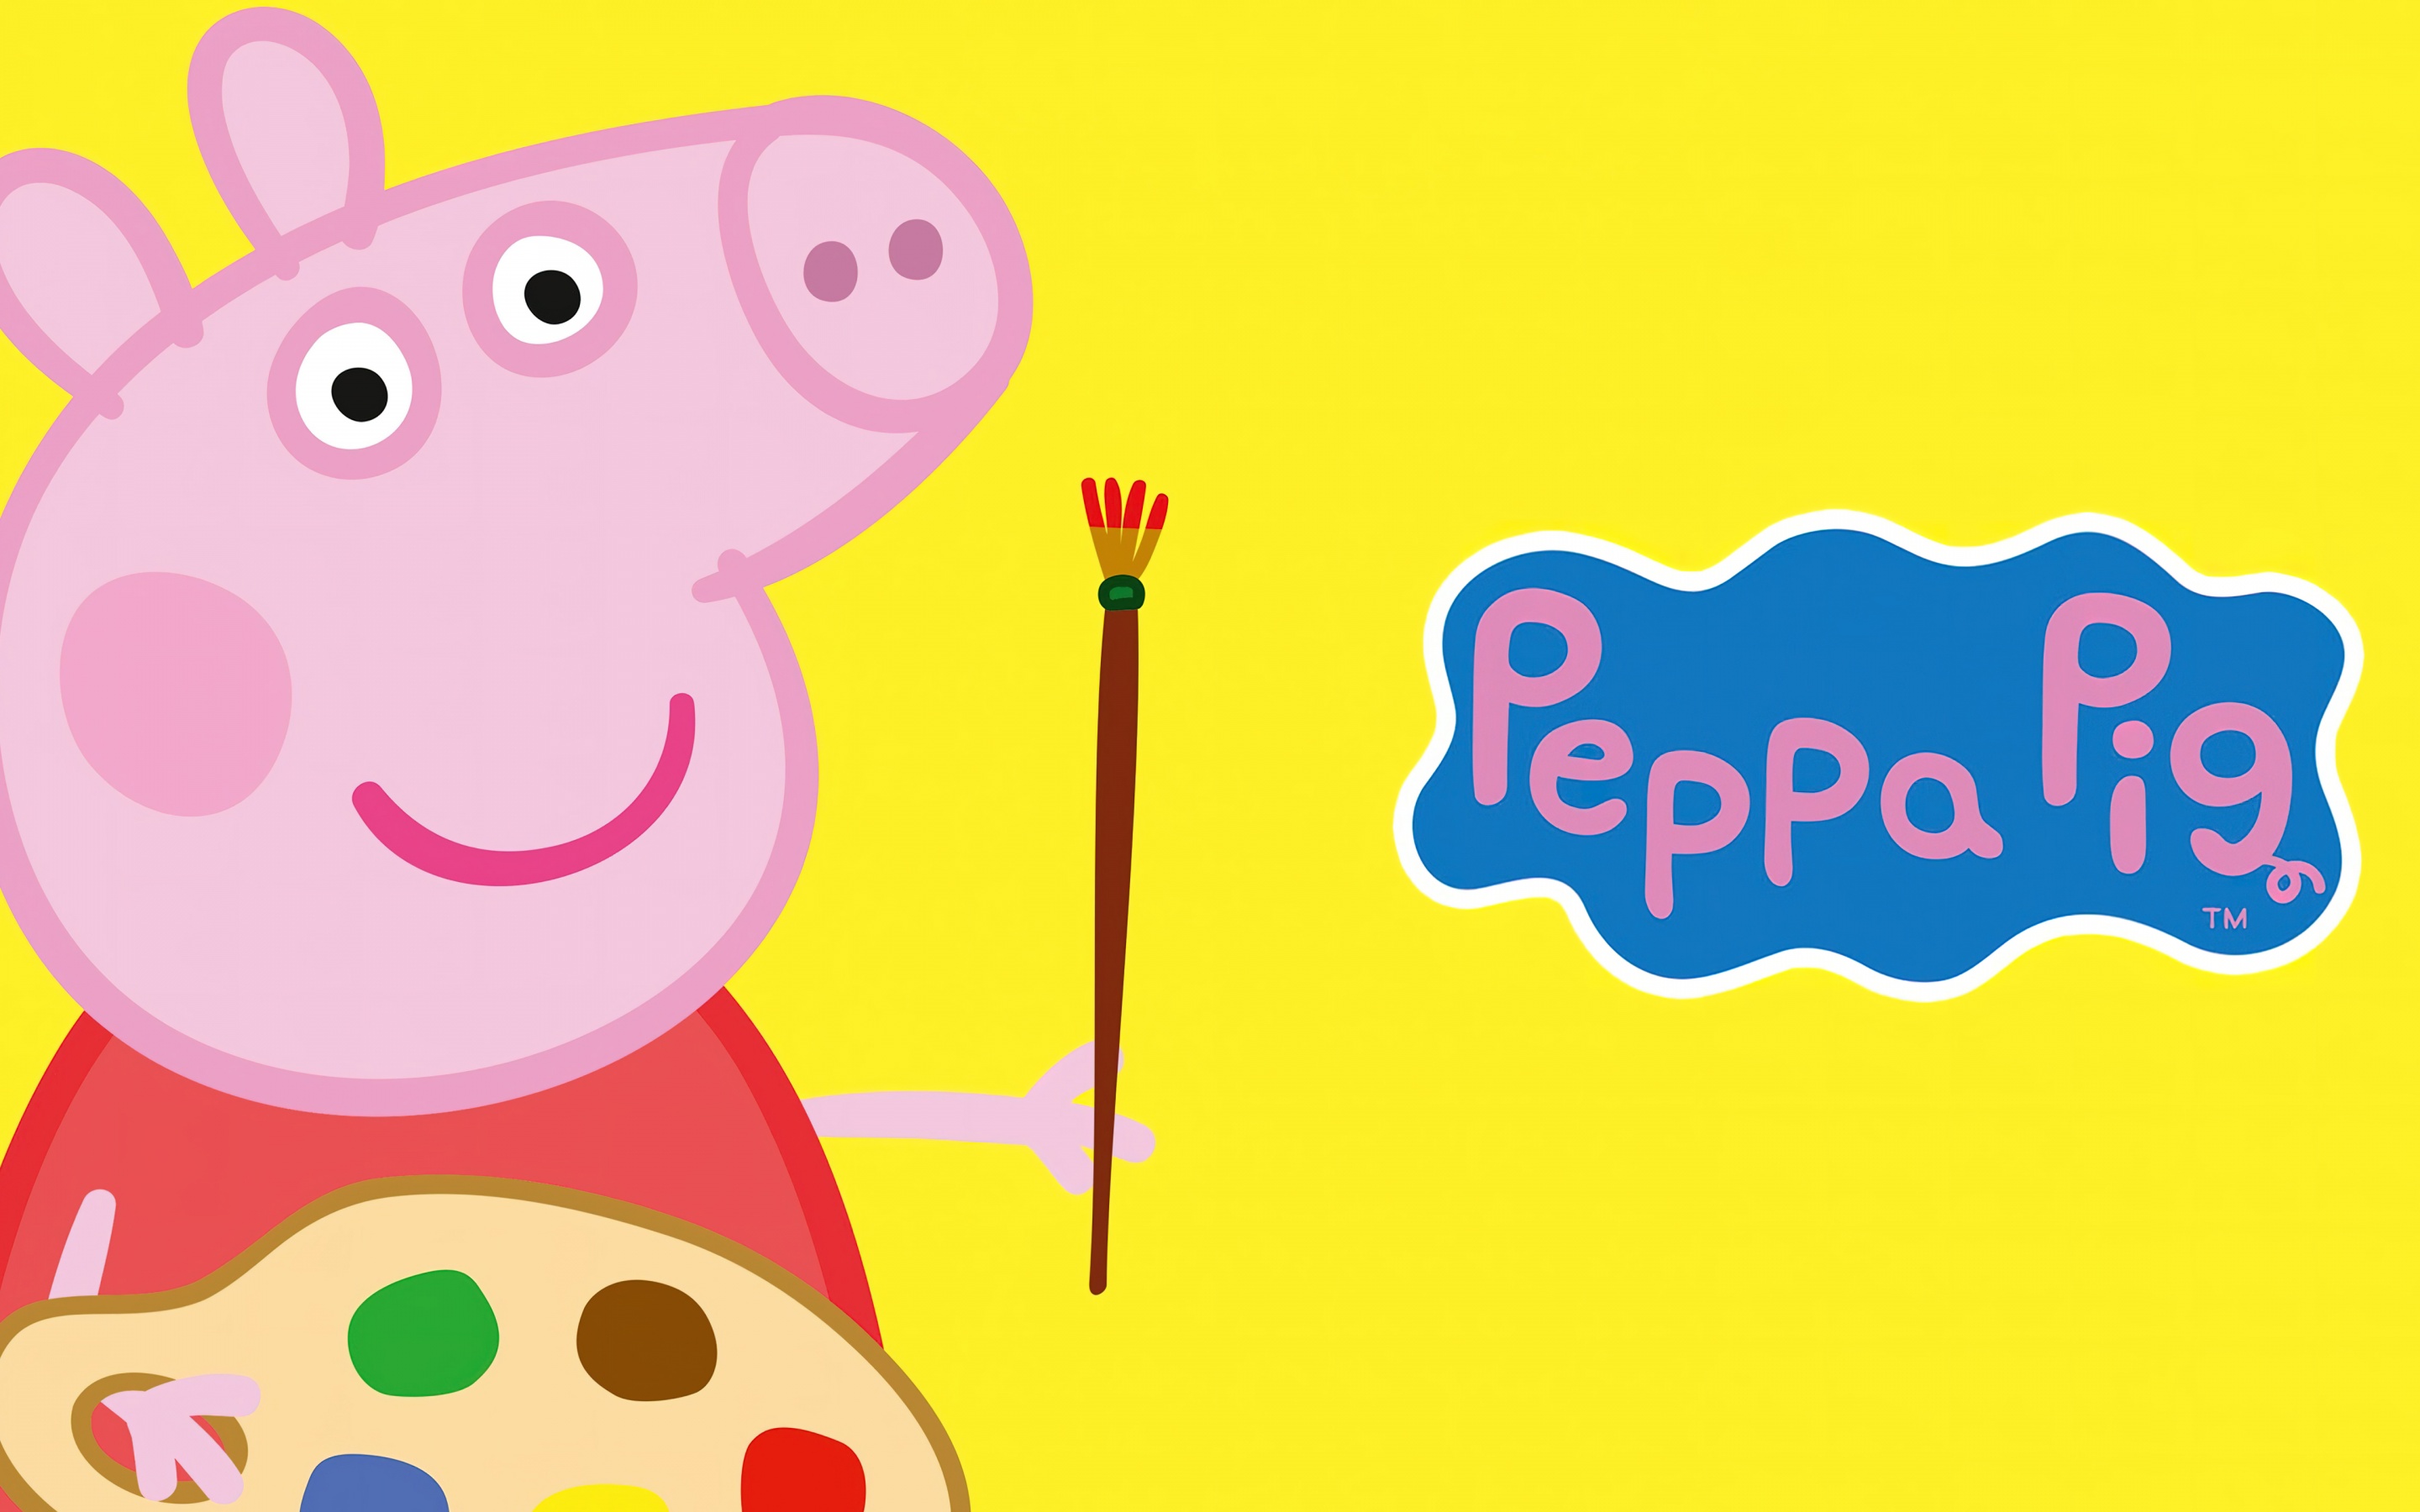 HD wallpaper: TV Show, Peppa Pig